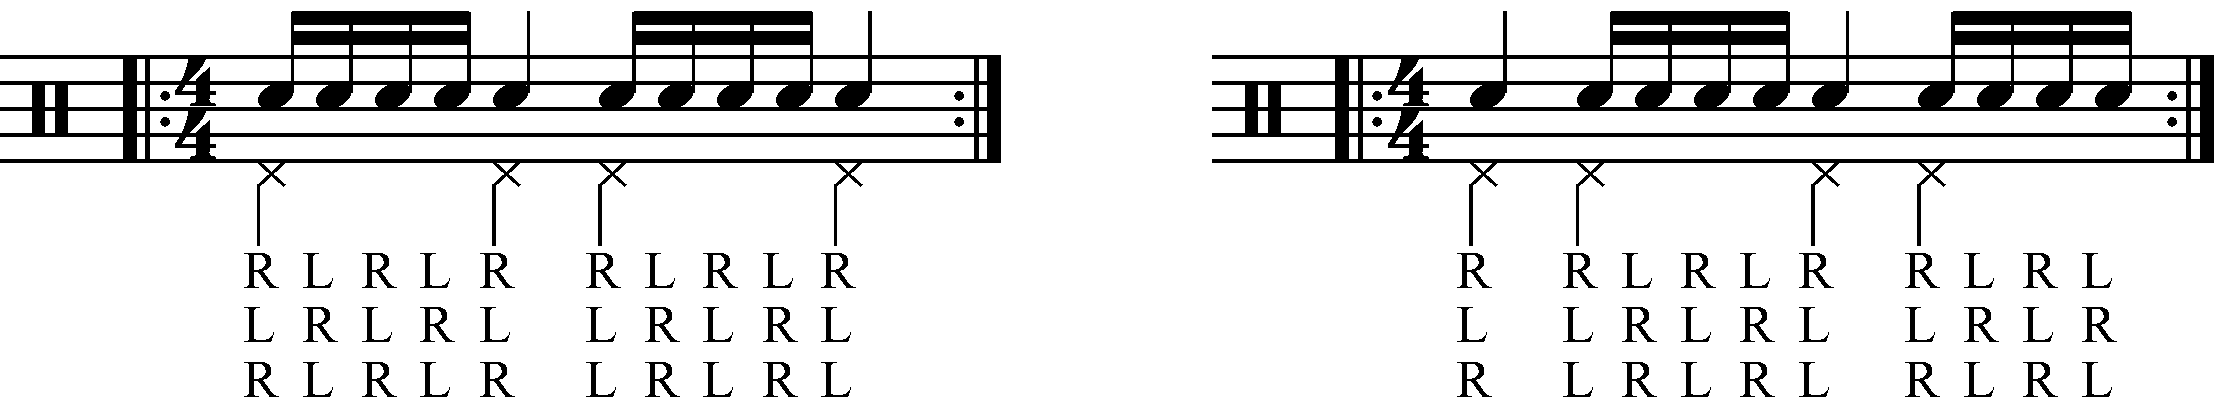 Adding quarter note feet under a single stroke 5